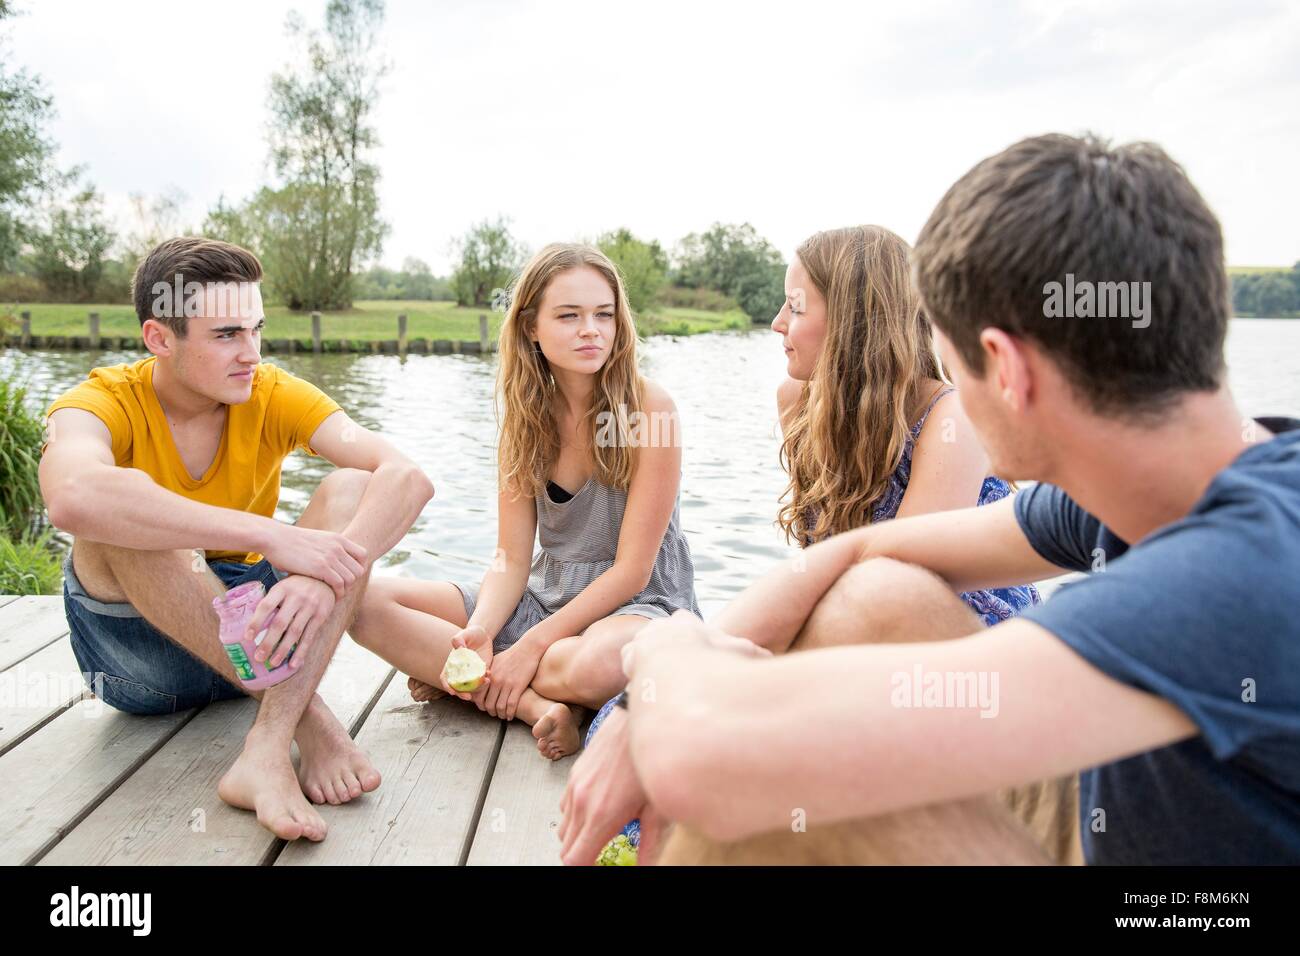 Groupe de jeunes adultes sitting on Jetty, relaxant Banque D'Images